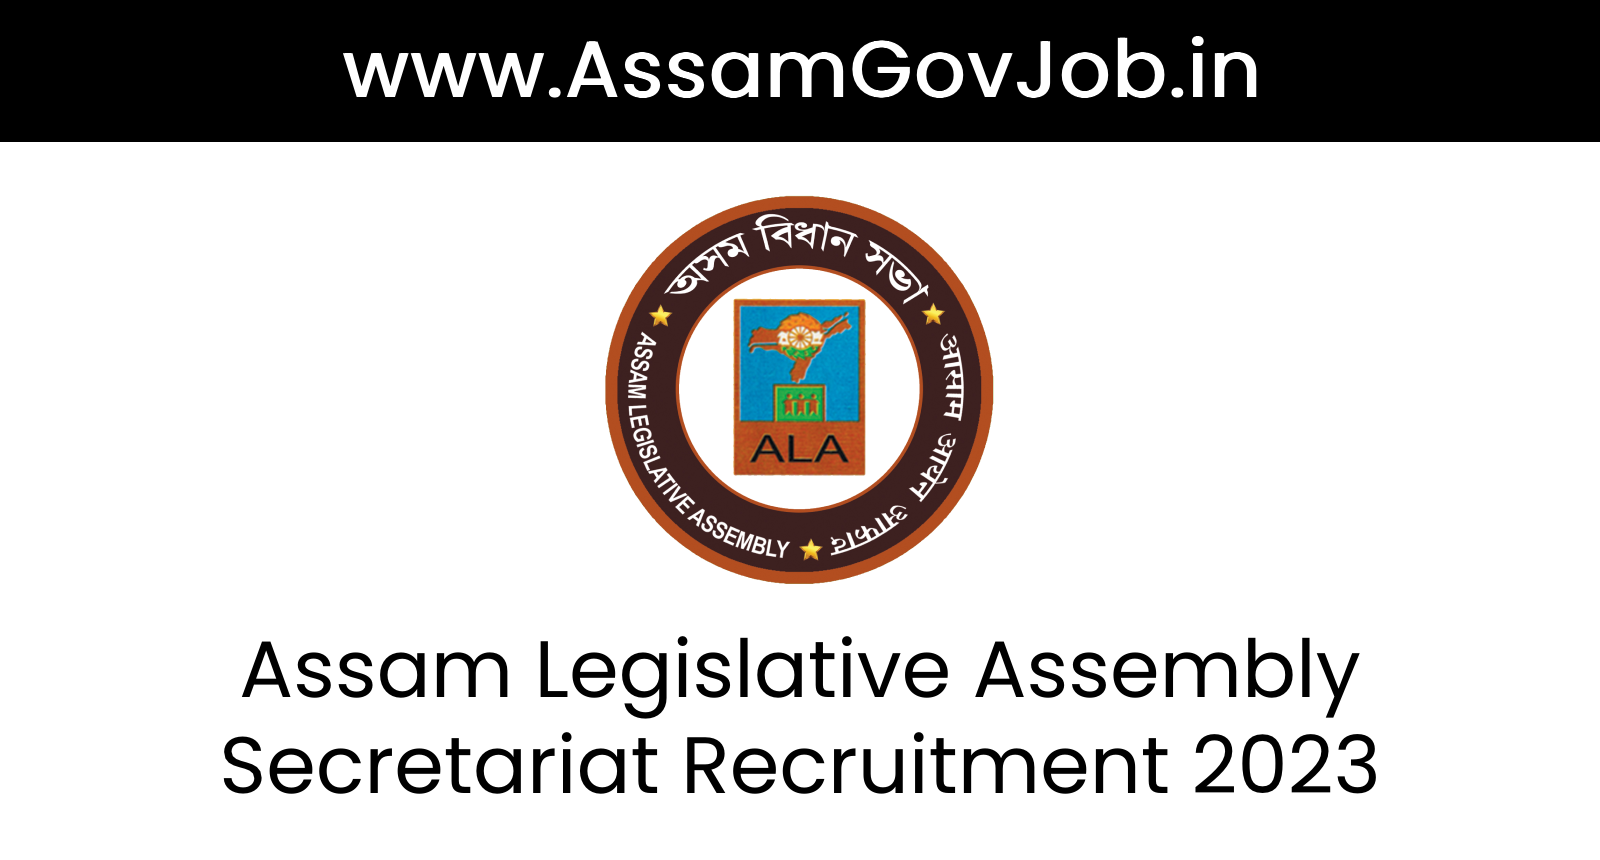 Assam Legislative Assembly Secretariat Recruitment